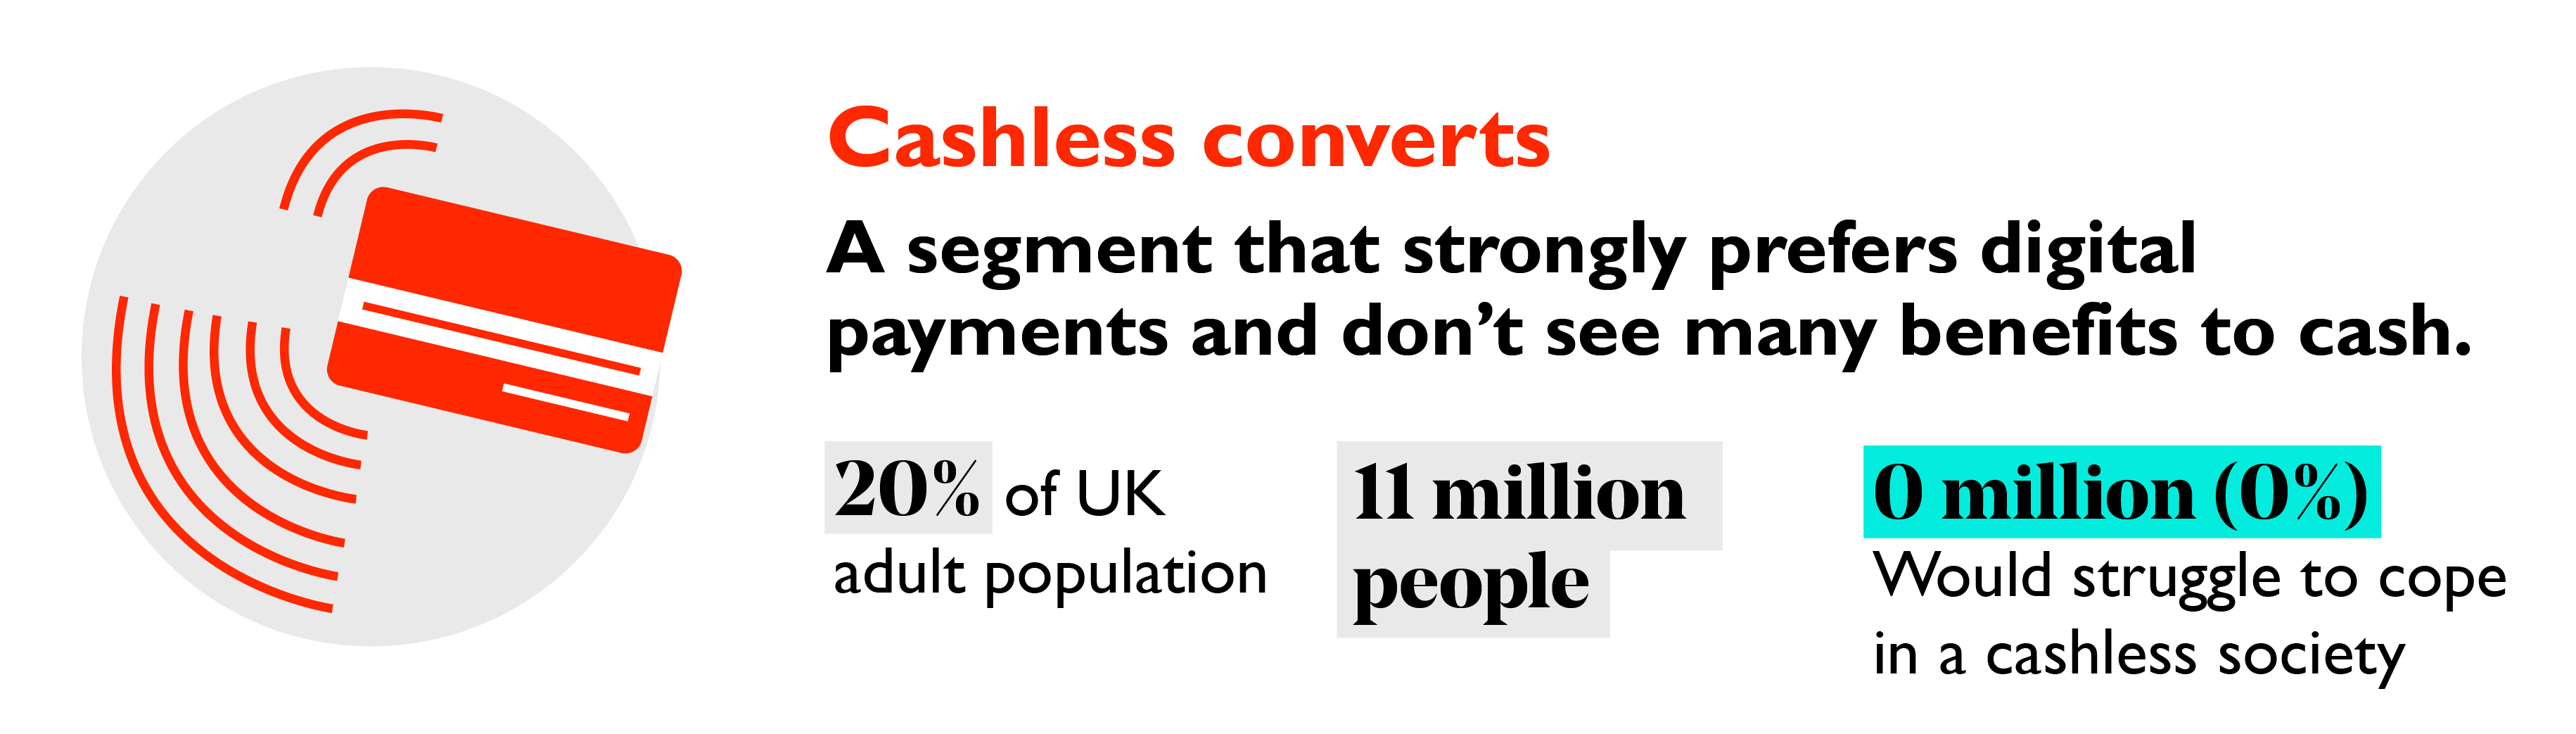 Cashless converts